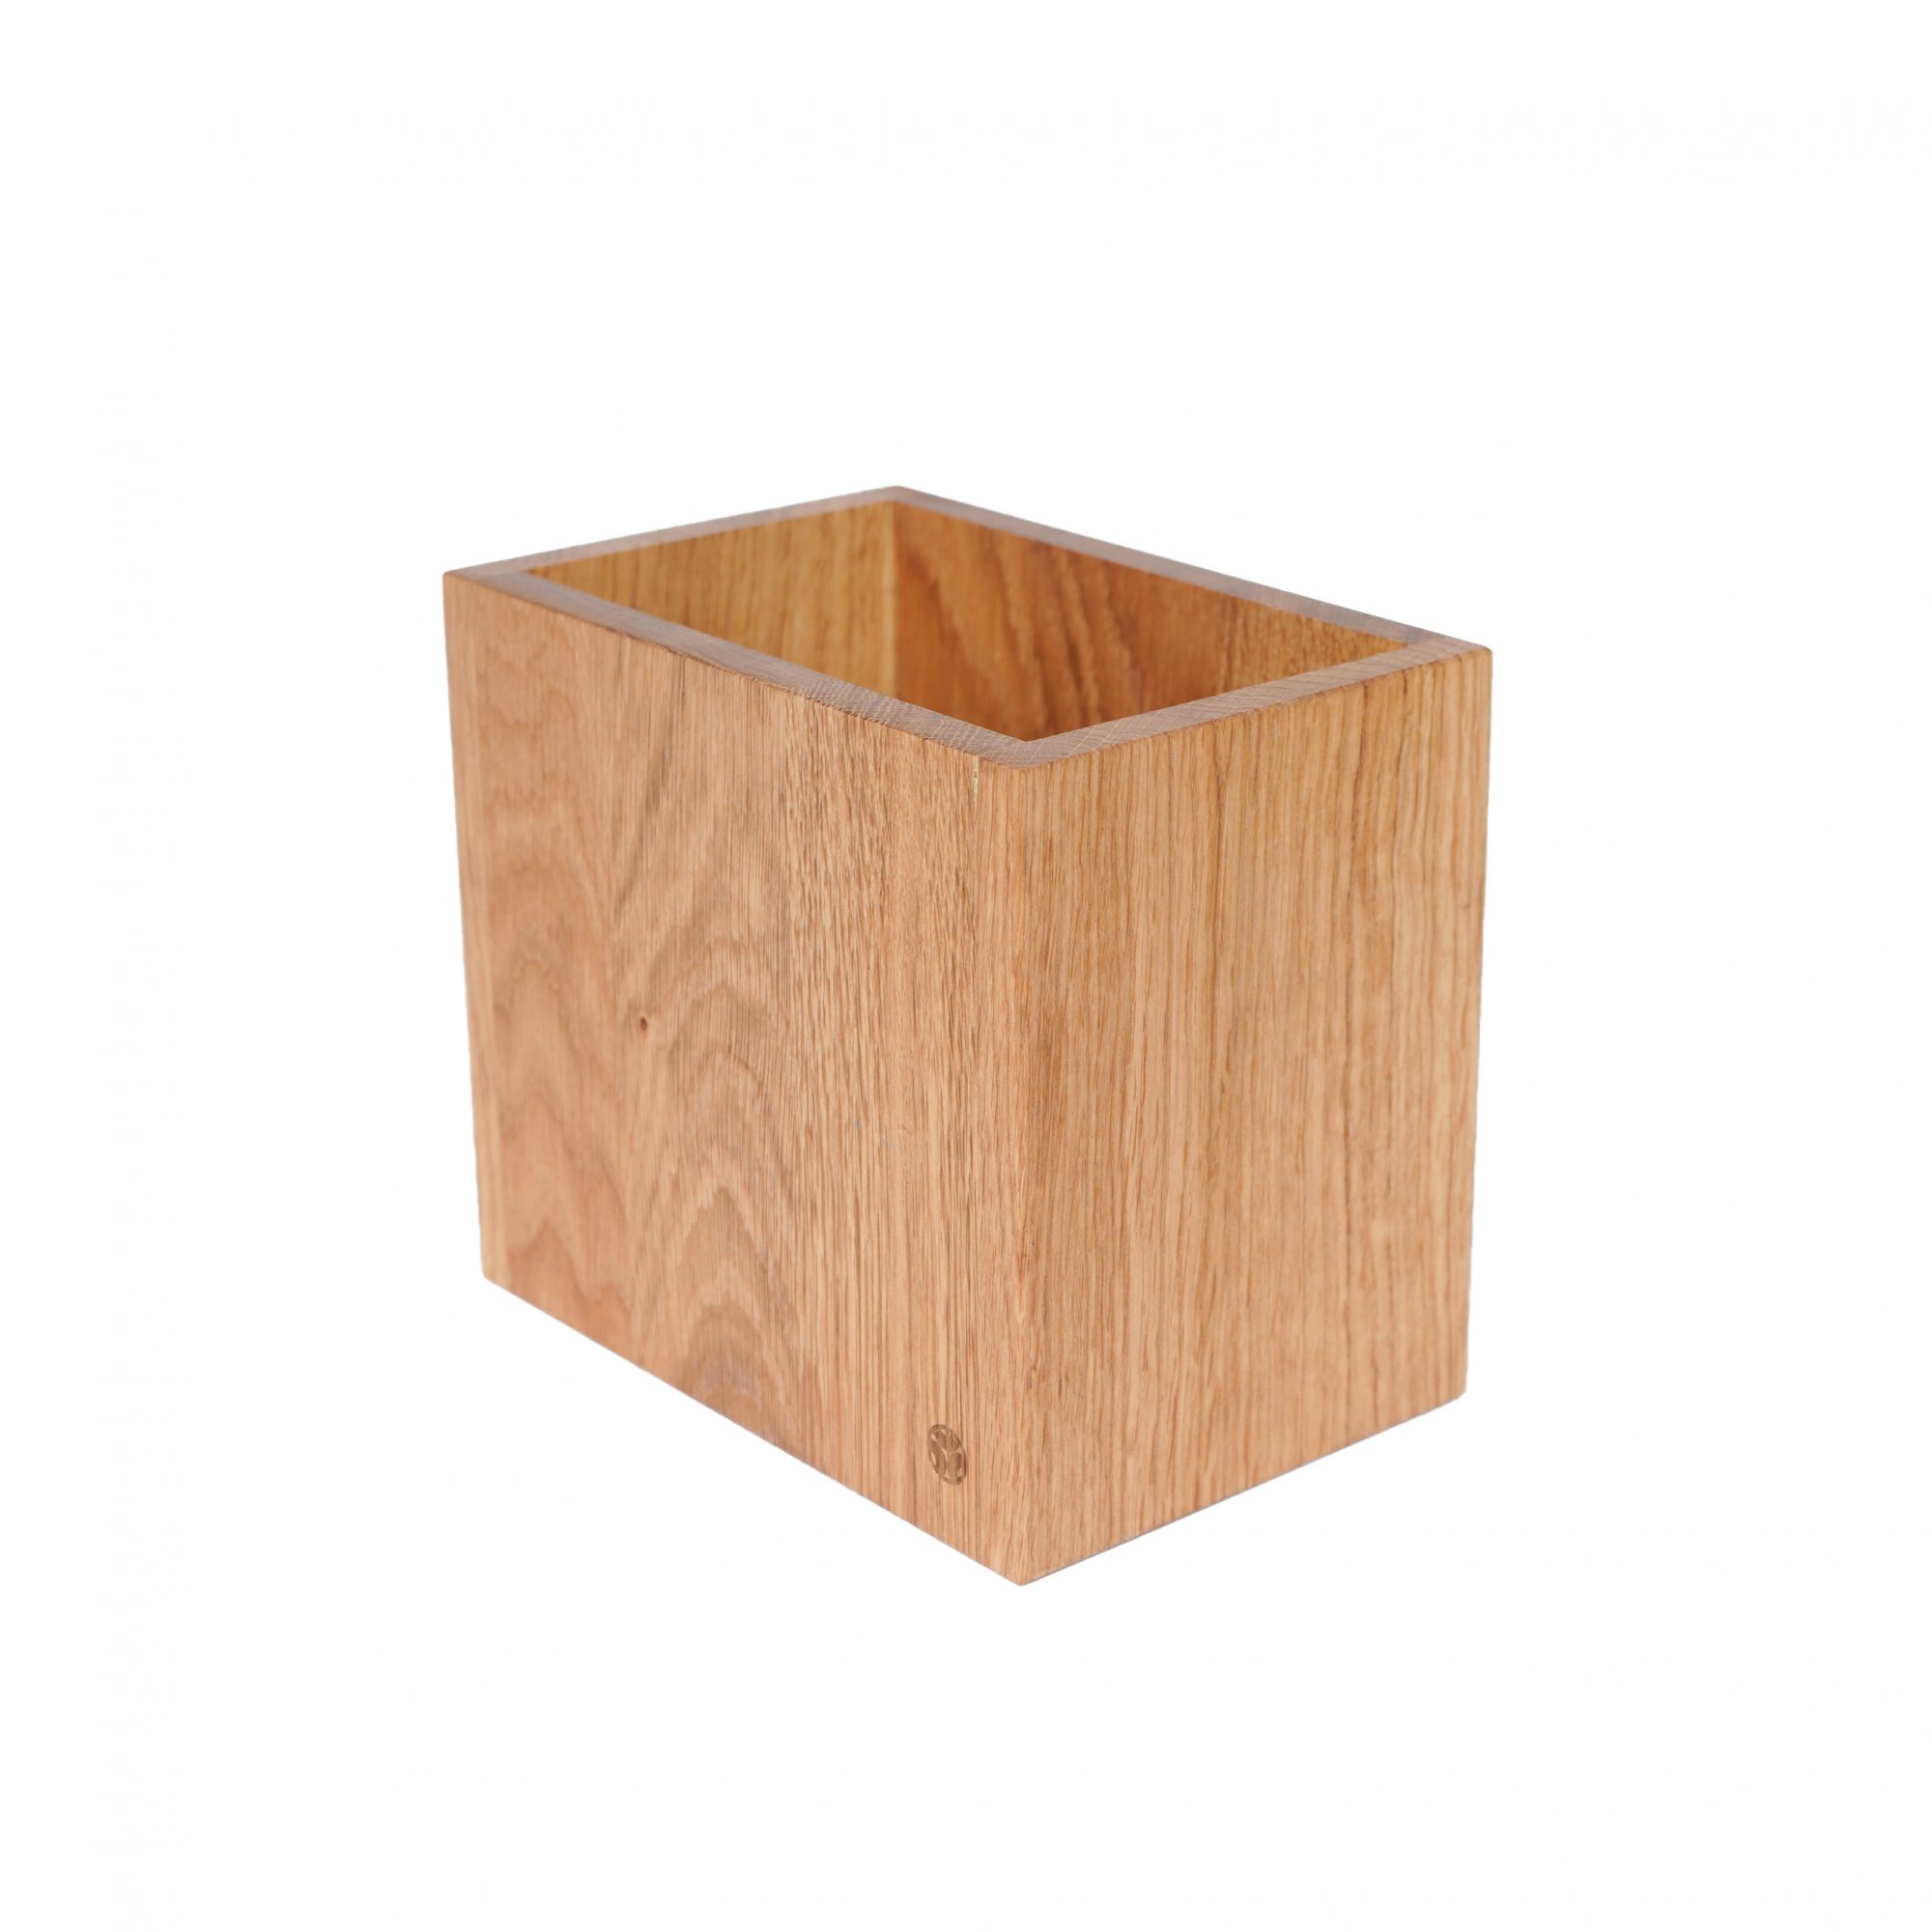 Wooden Kitchen Utensils Holder - Oak